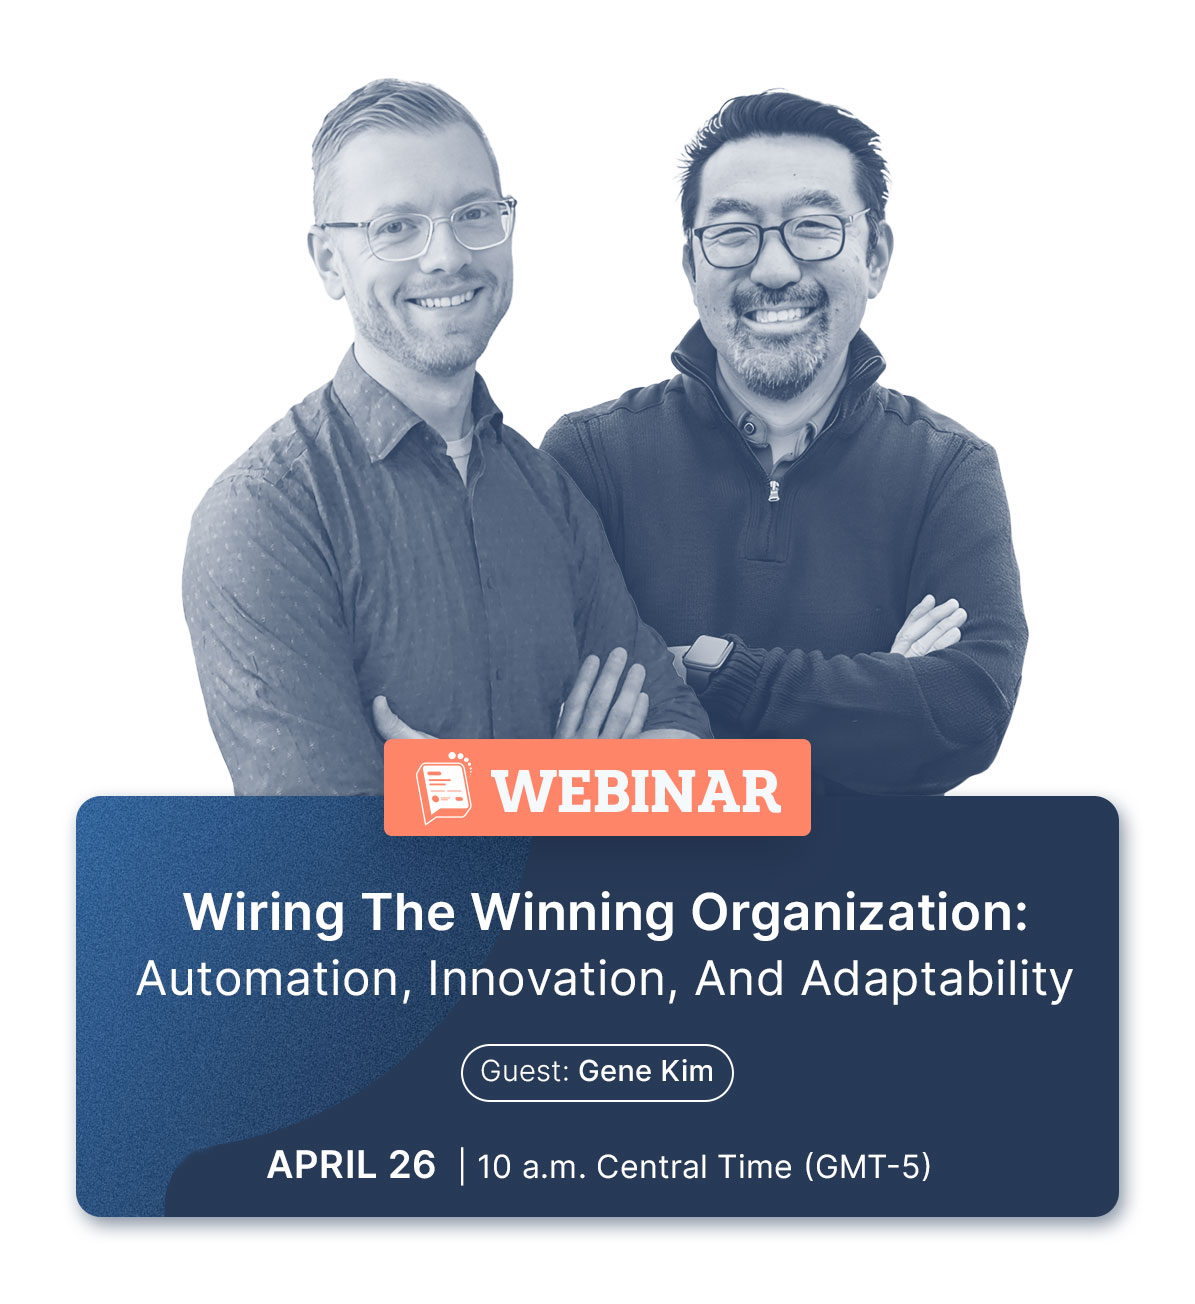 Wiring The Winning Organization: Automation, Innovation, And Adaptability